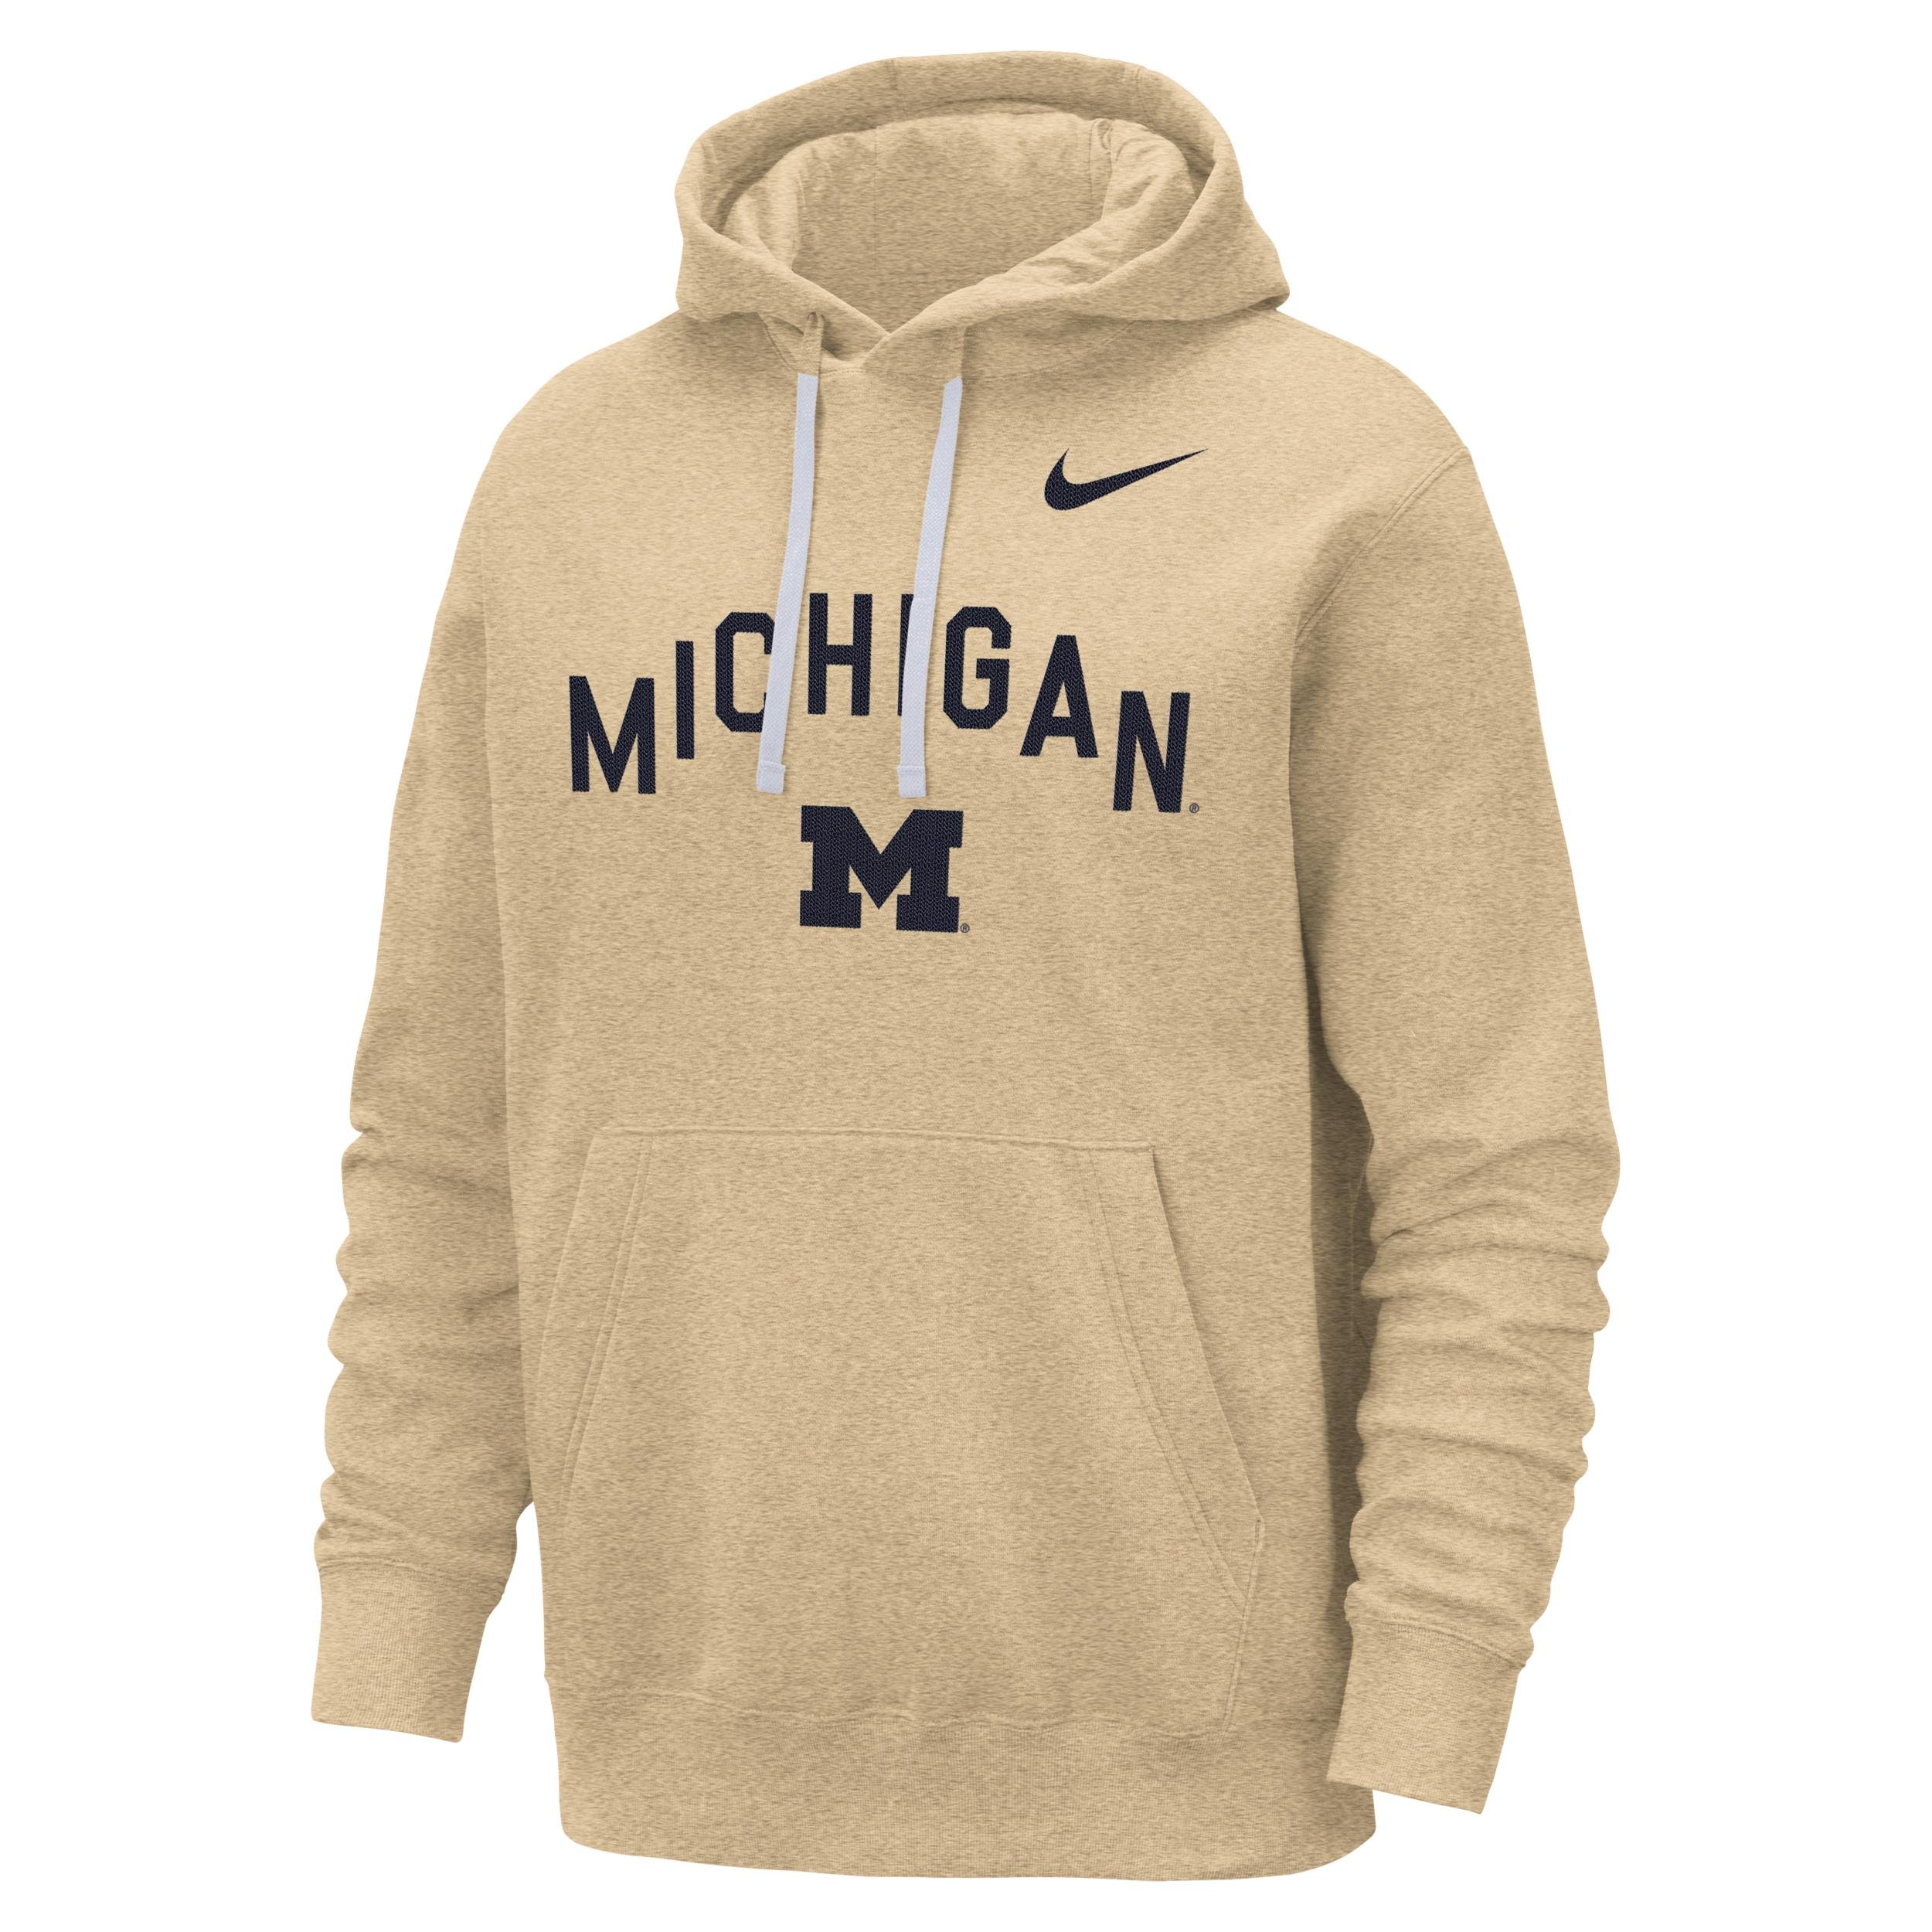 Michigan Club Fleece Nike Men's College Pullover Hoodie by NIKE